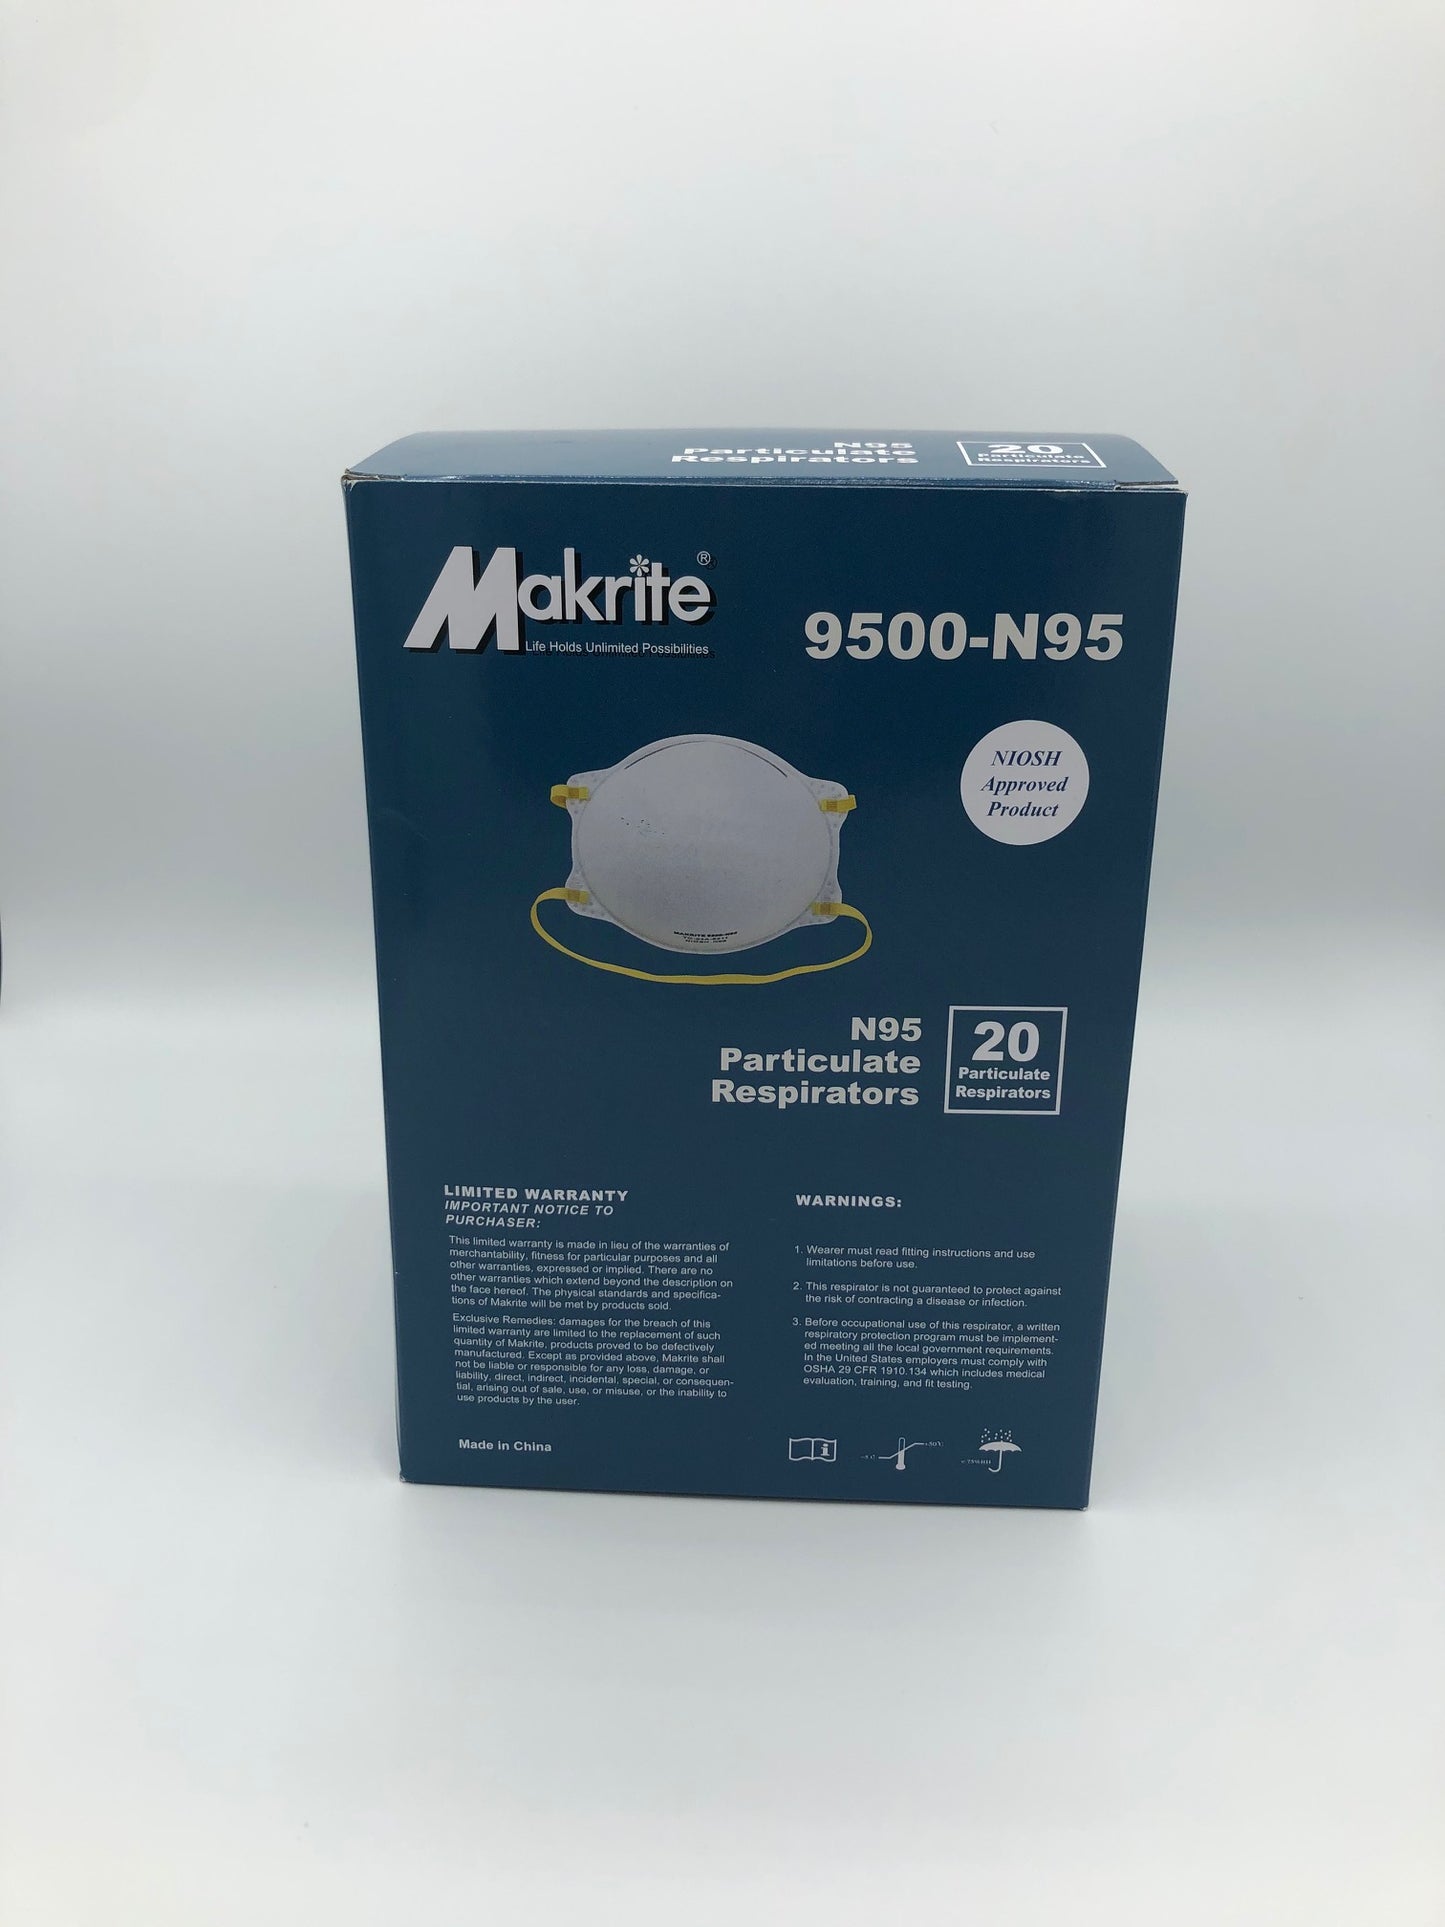 Makrite N95-9500-Niosh Approved-20 per box